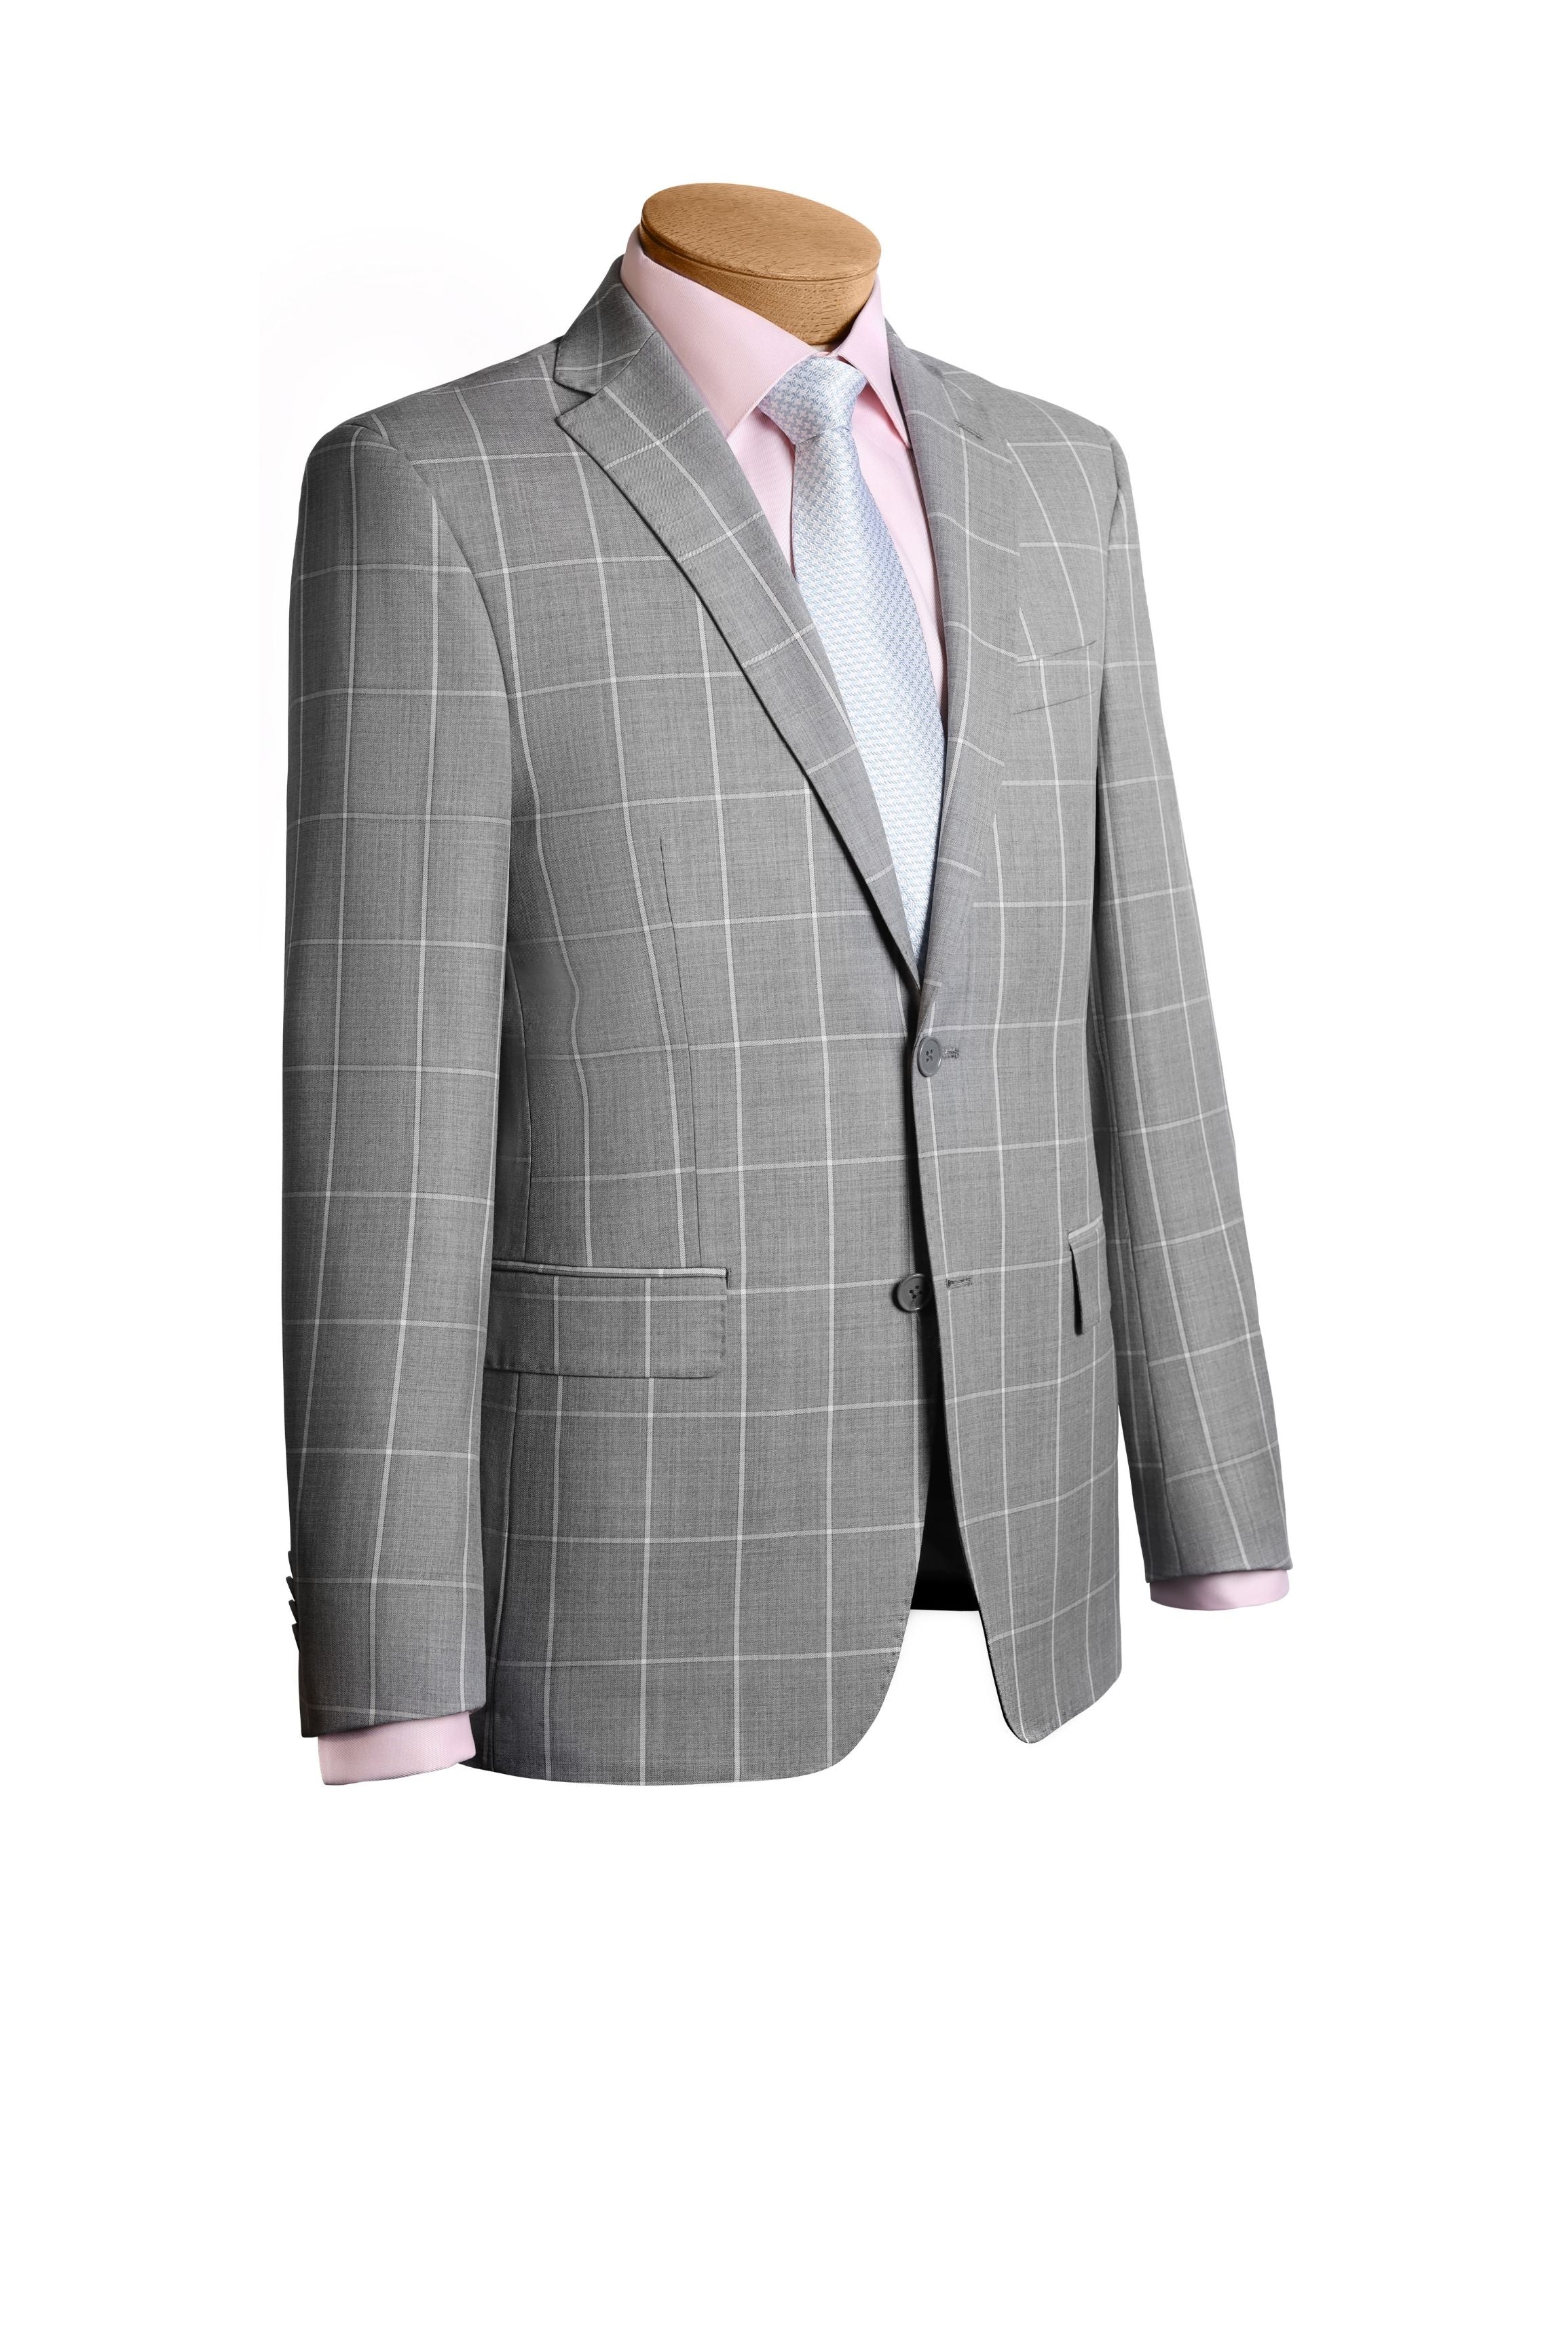 Plaid Grey Modern Suit - Mastroianni Fashions